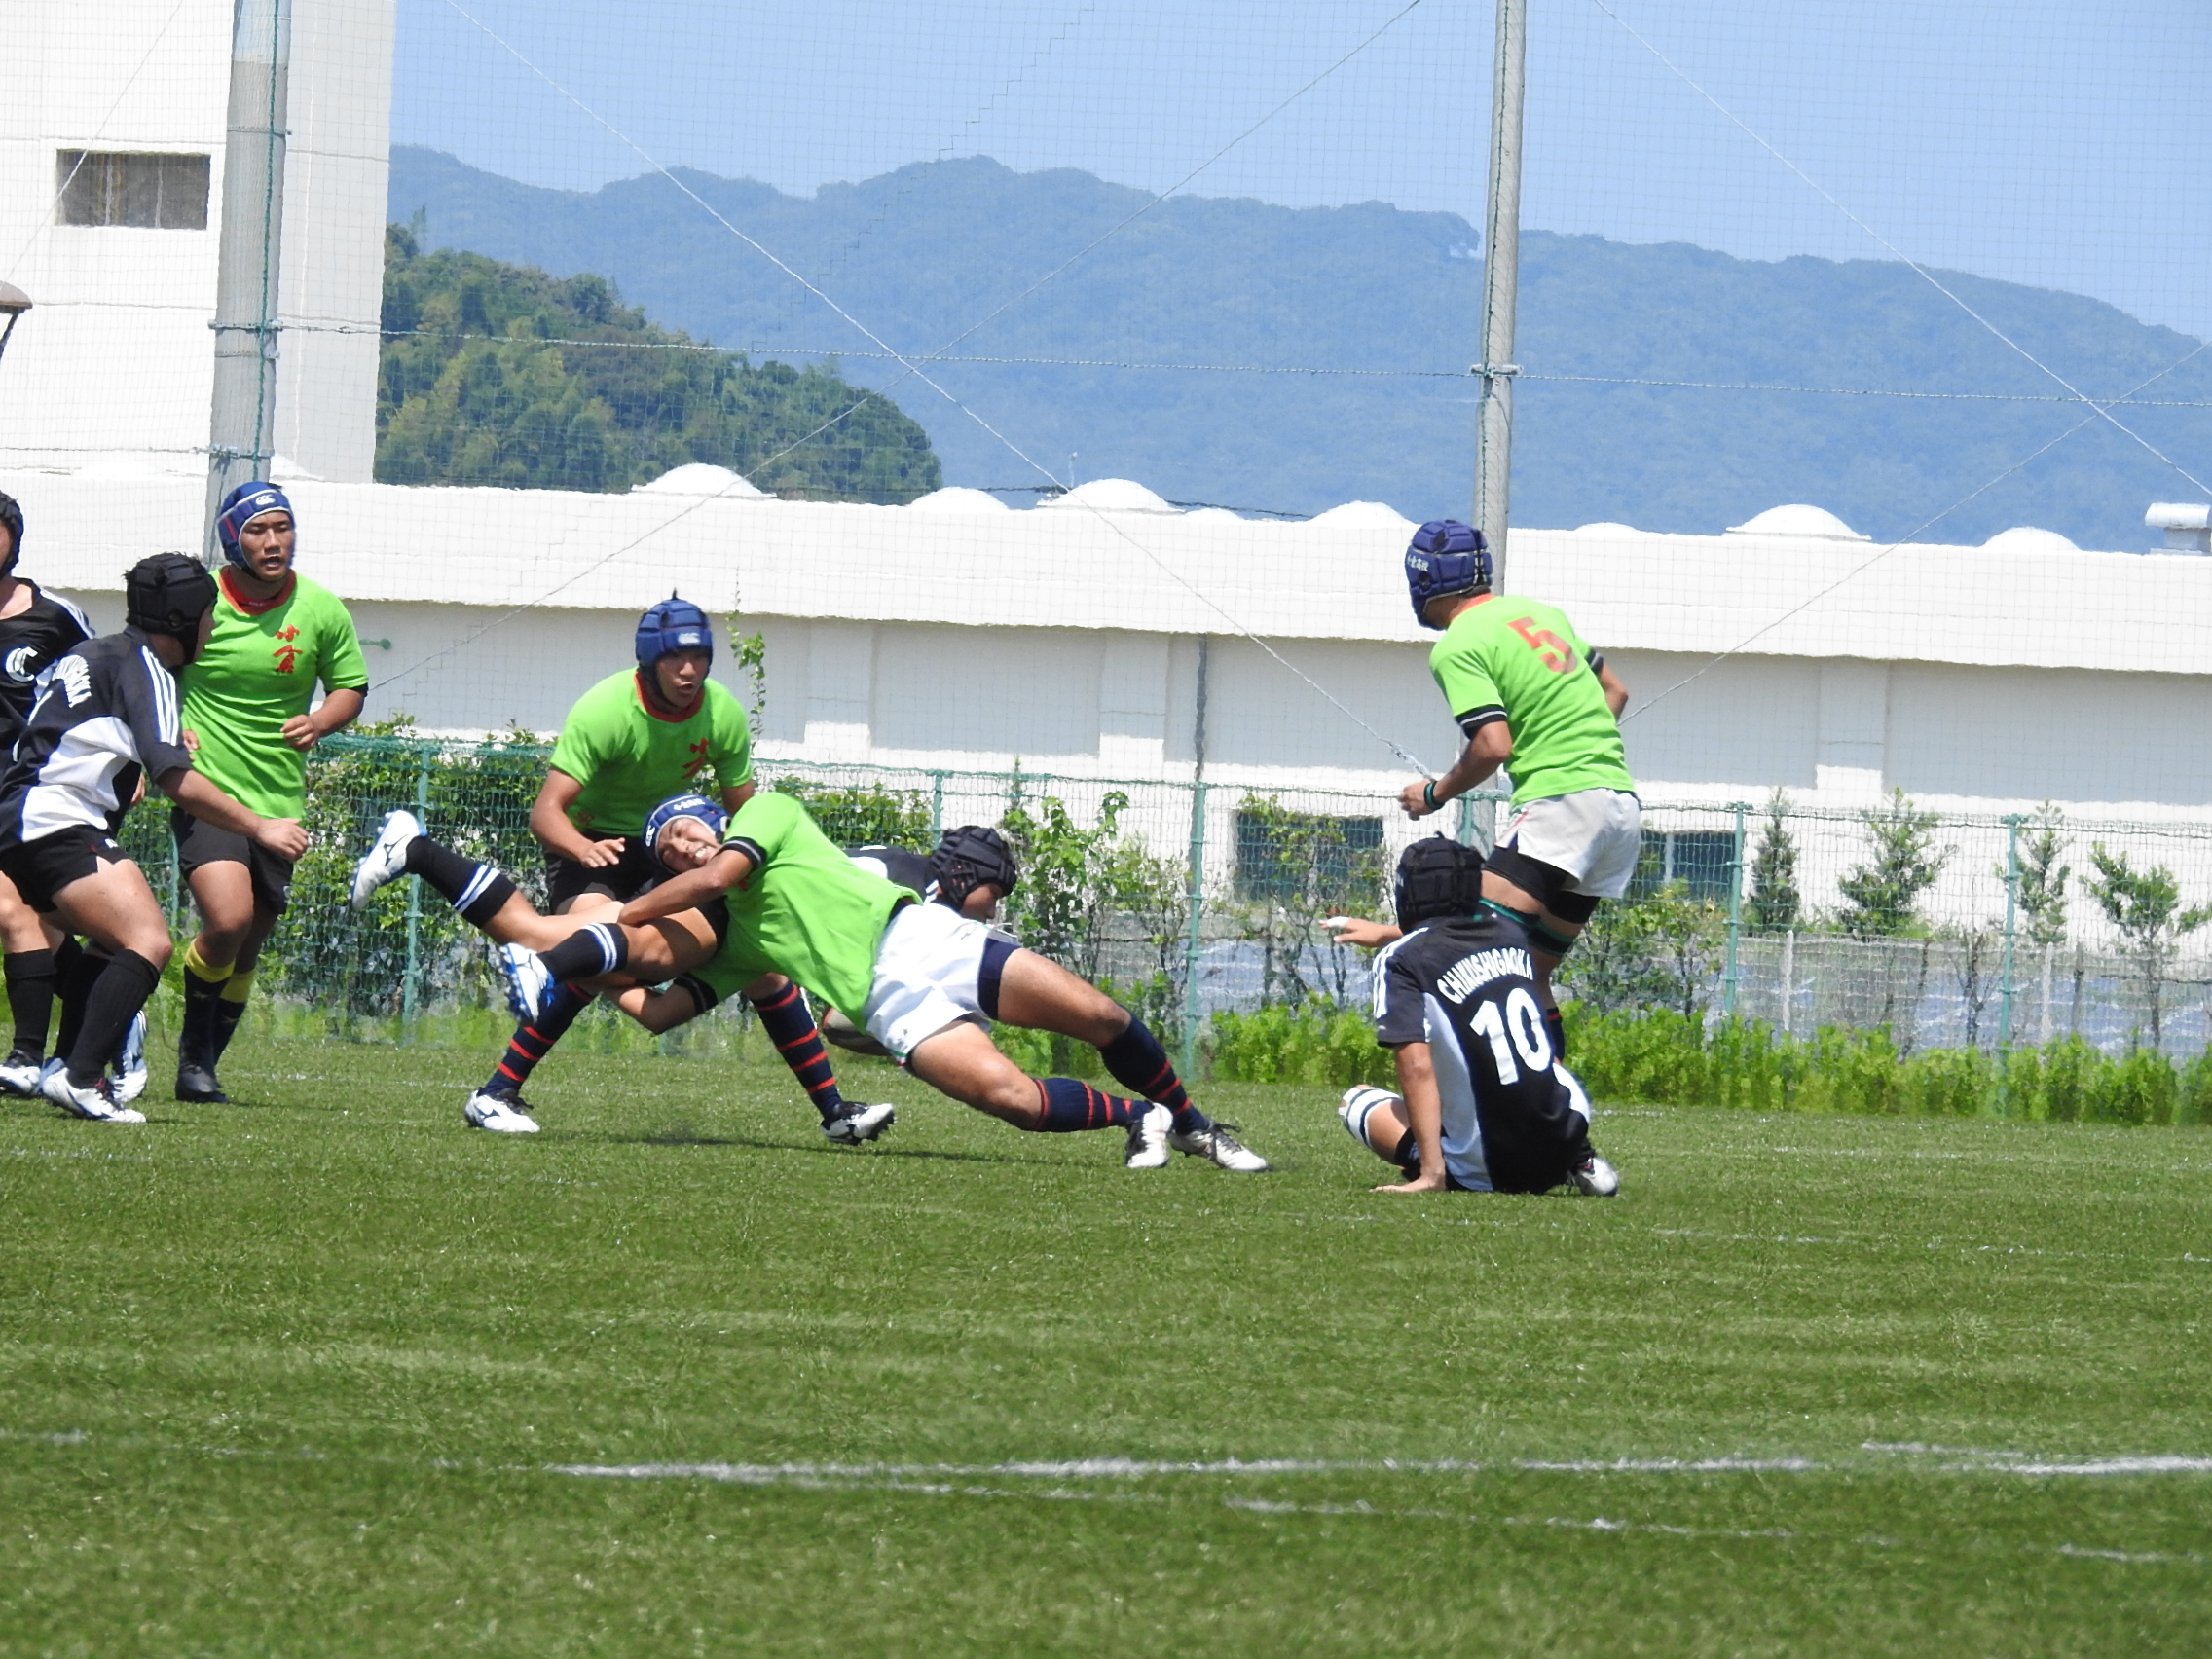 http://kokura-rugby.sakura.ne.jp/DSCN6923.JPG